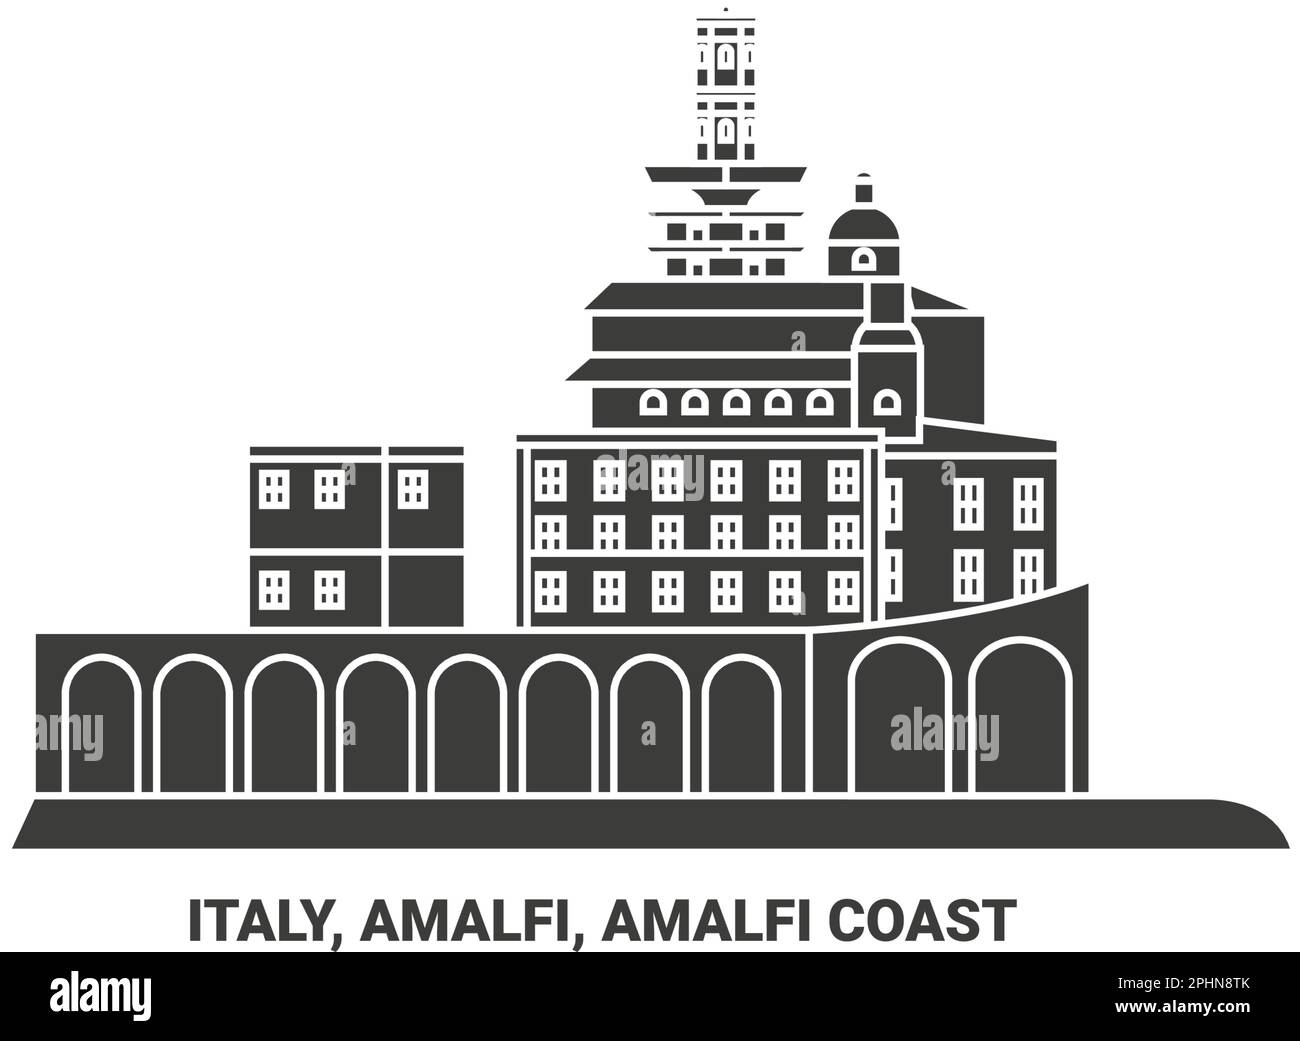 Italy, Amalfi, Amalfi Coast travel landmark vector illustration Stock Vector